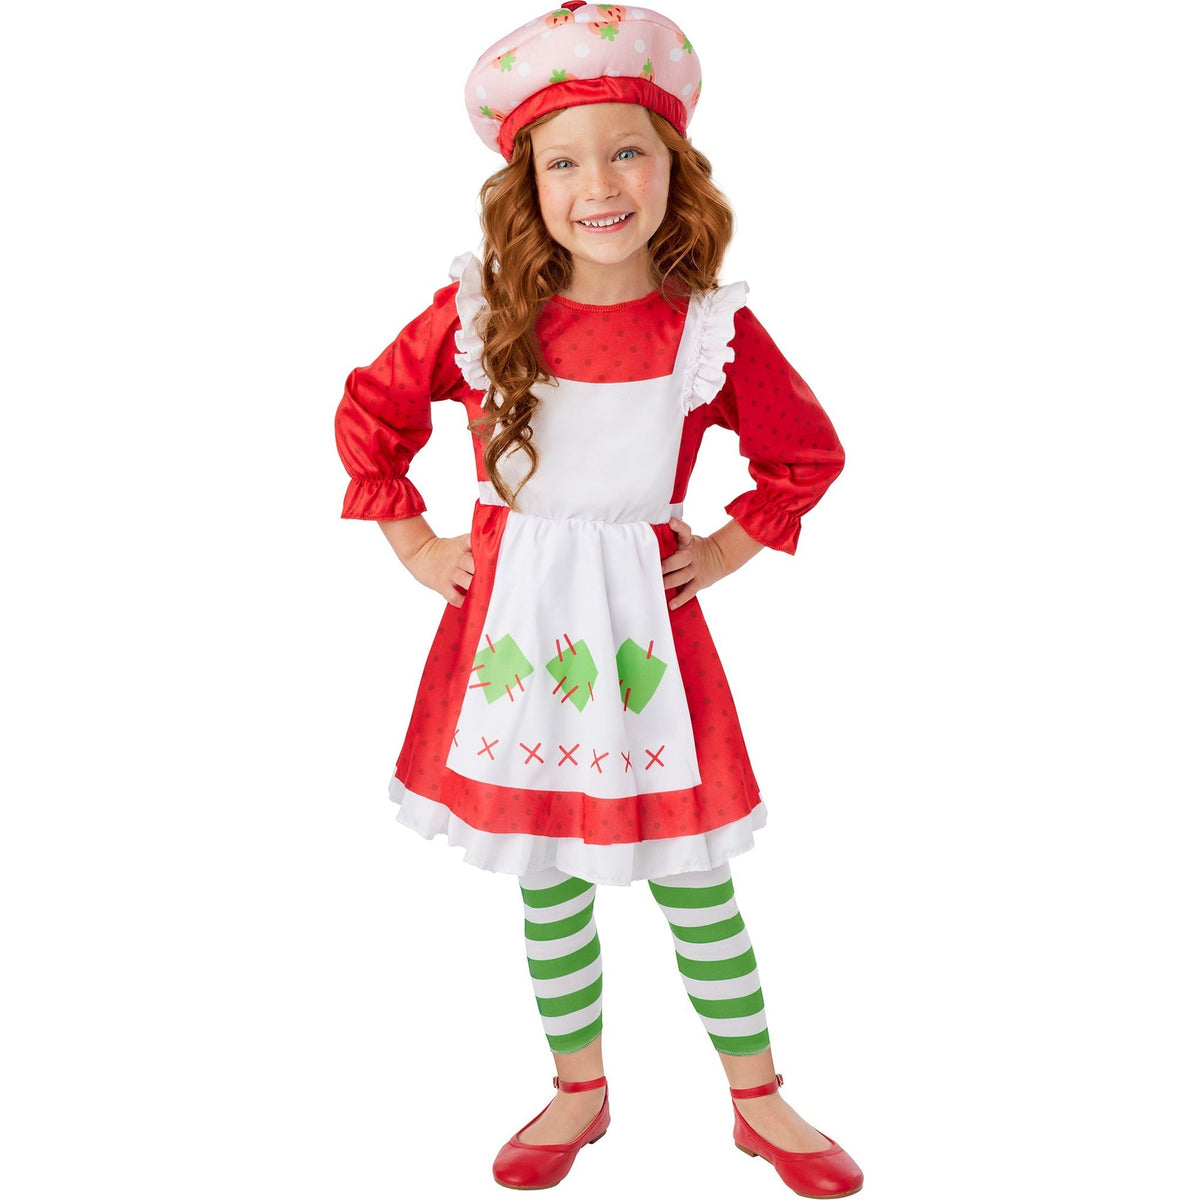 IN SPIRIT DESIGNS Costumes Strawberry Shortcake Costume for Toddlers, Strawberry Shortcake, Dress and Leggings